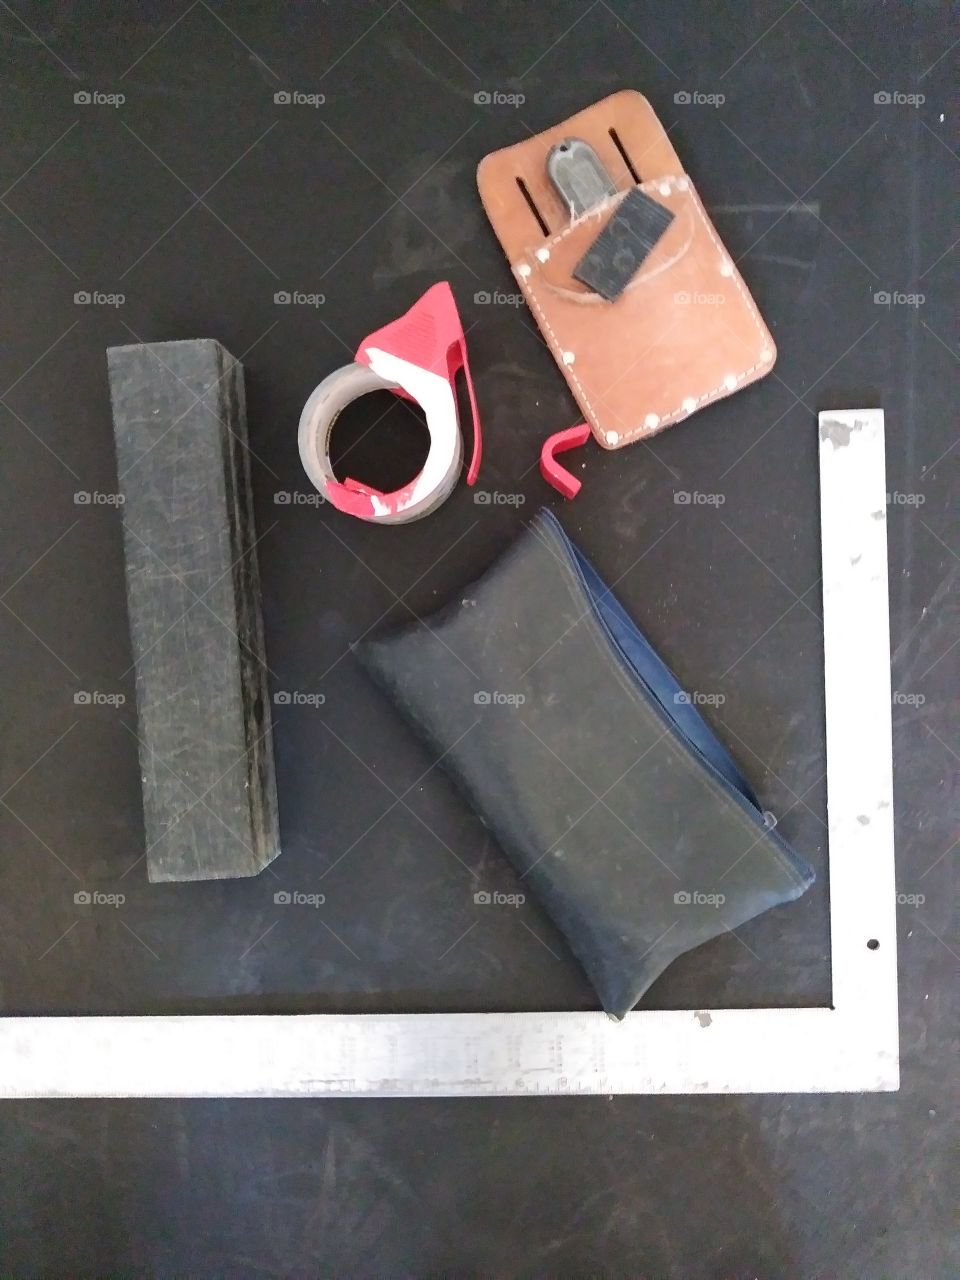 tools for installing laminate flooring